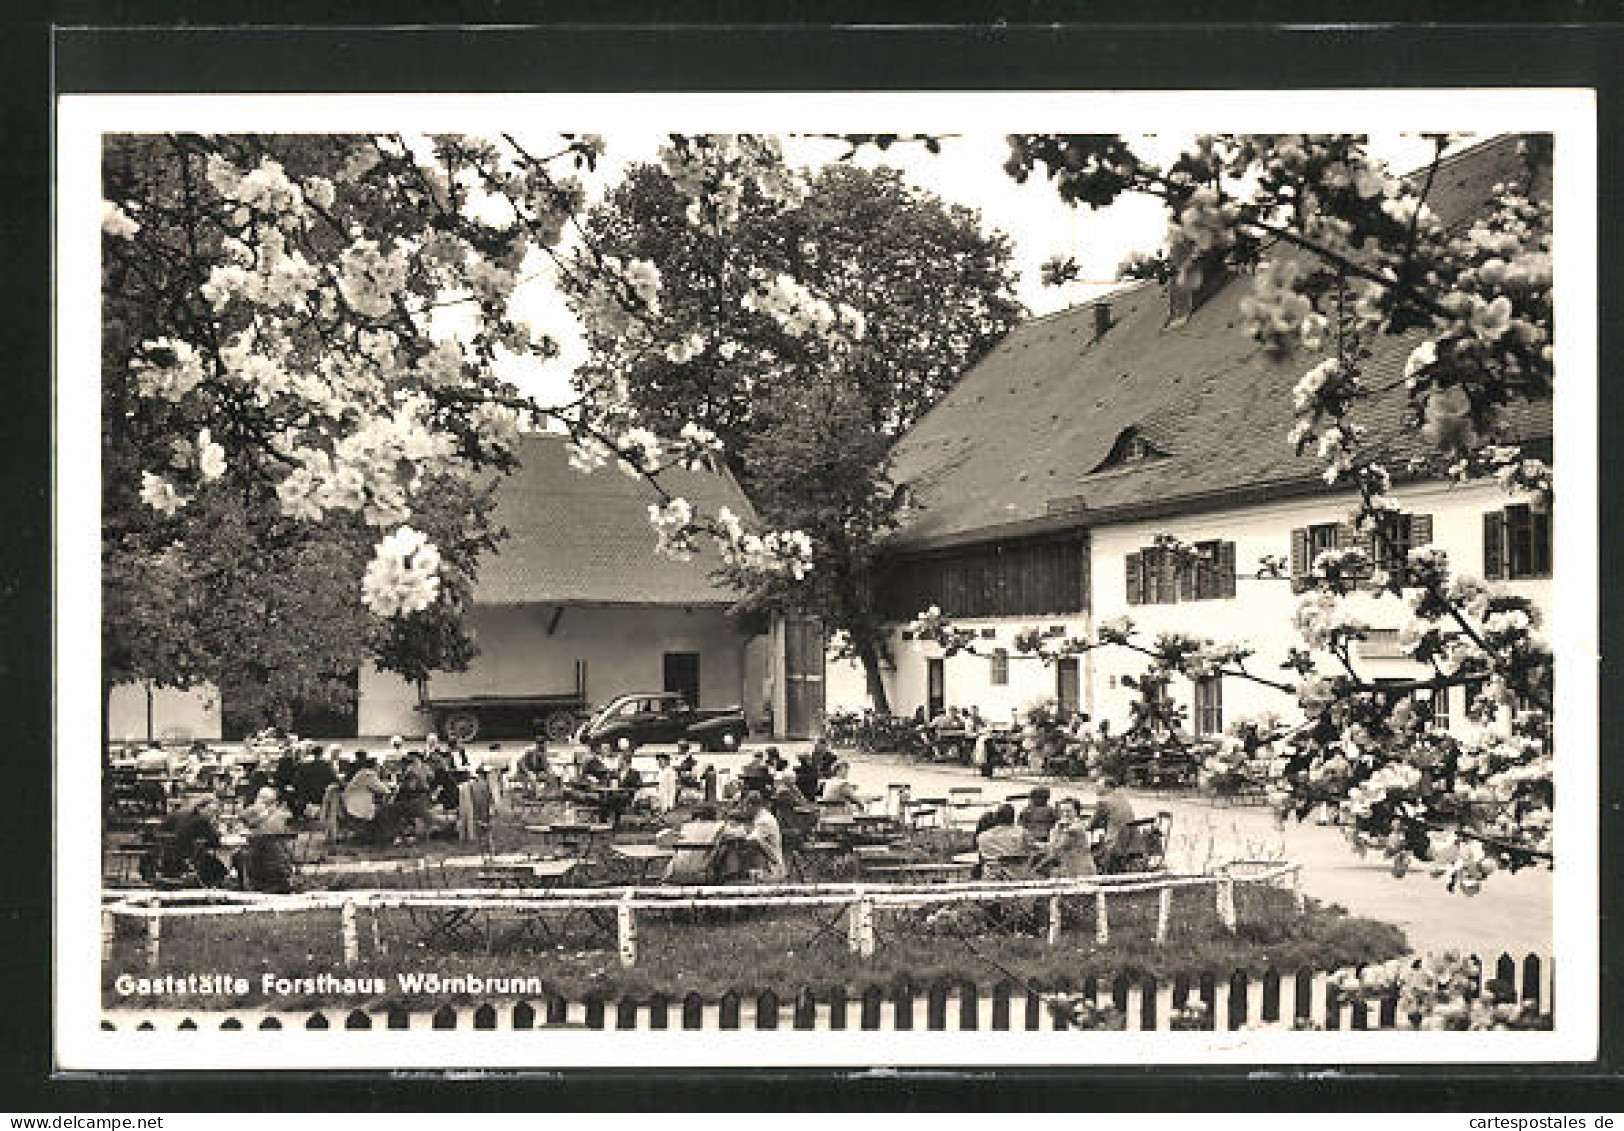 AK Grünwald, Gasthaus Forsthaus Wörnbrunn  - Chasse